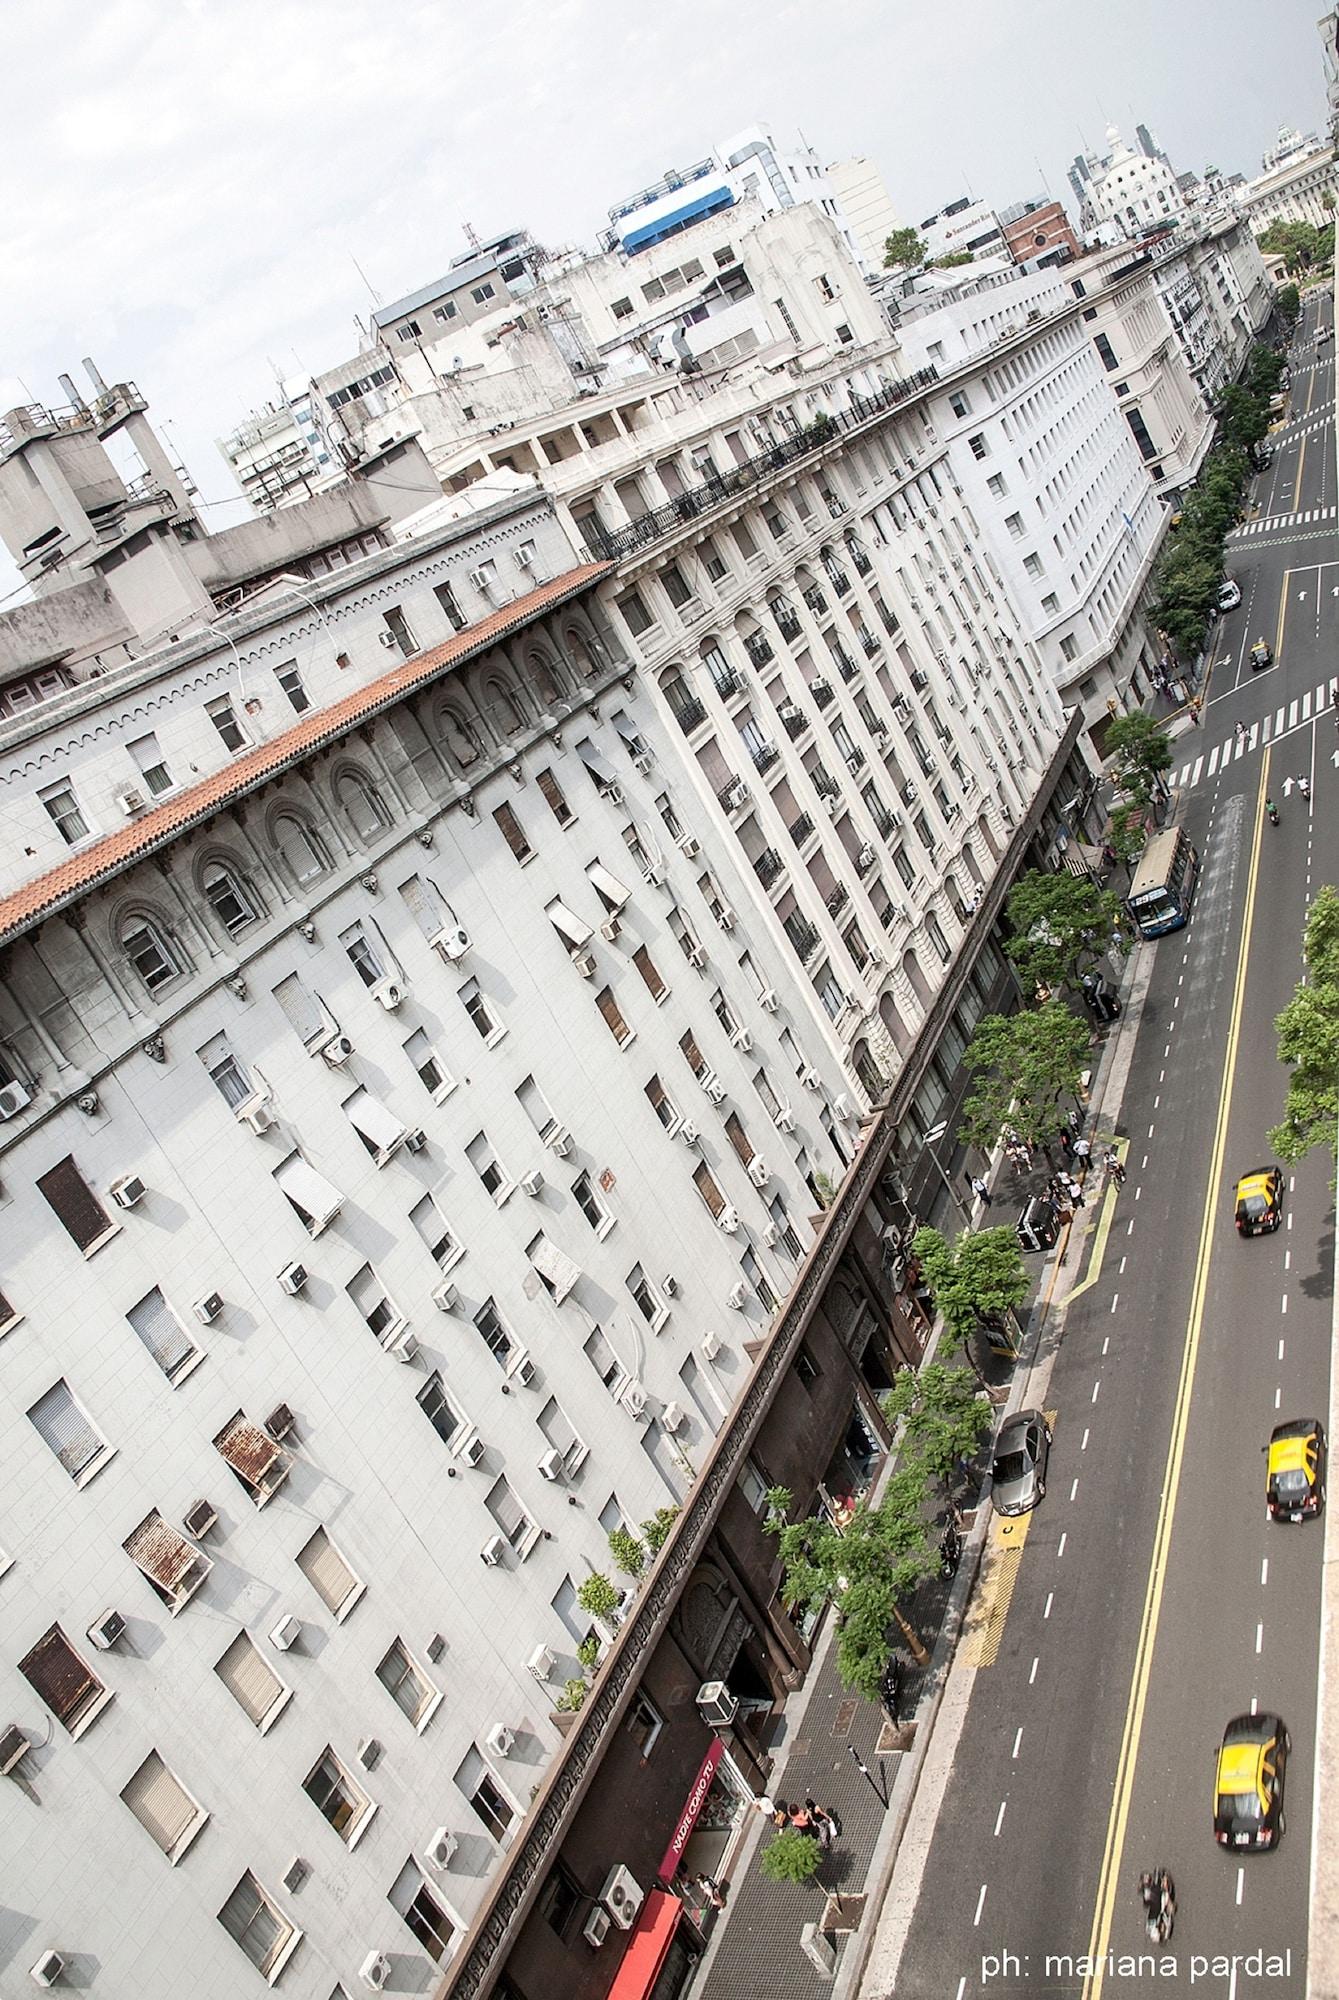 Hr Luxor Hotel Buenos Aires Dış mekan fotoğraf